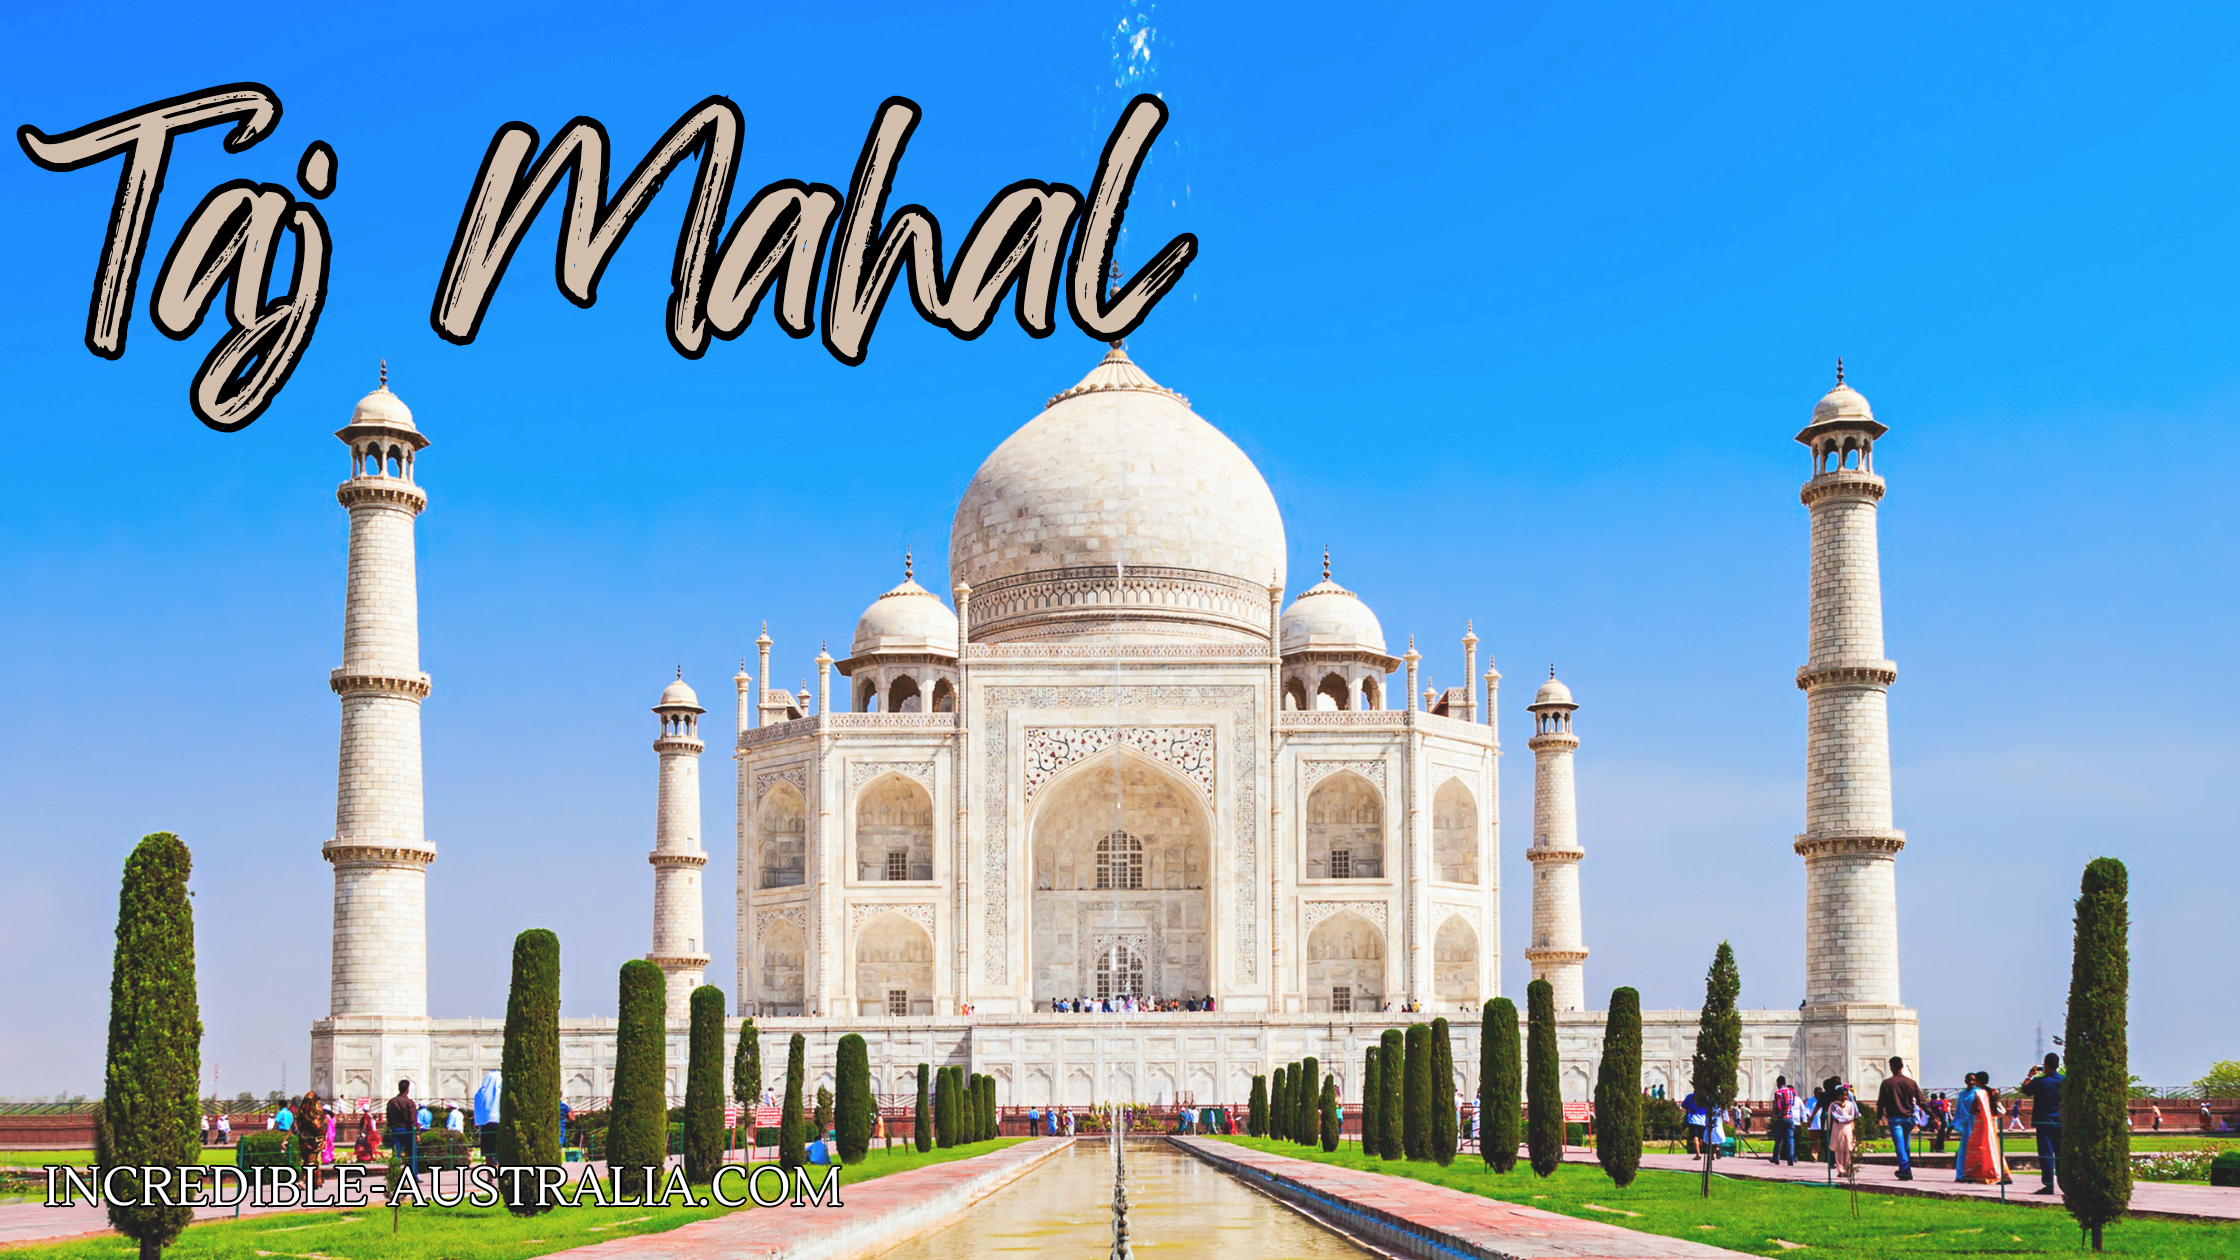 The Taj Mahal's Ode to Love